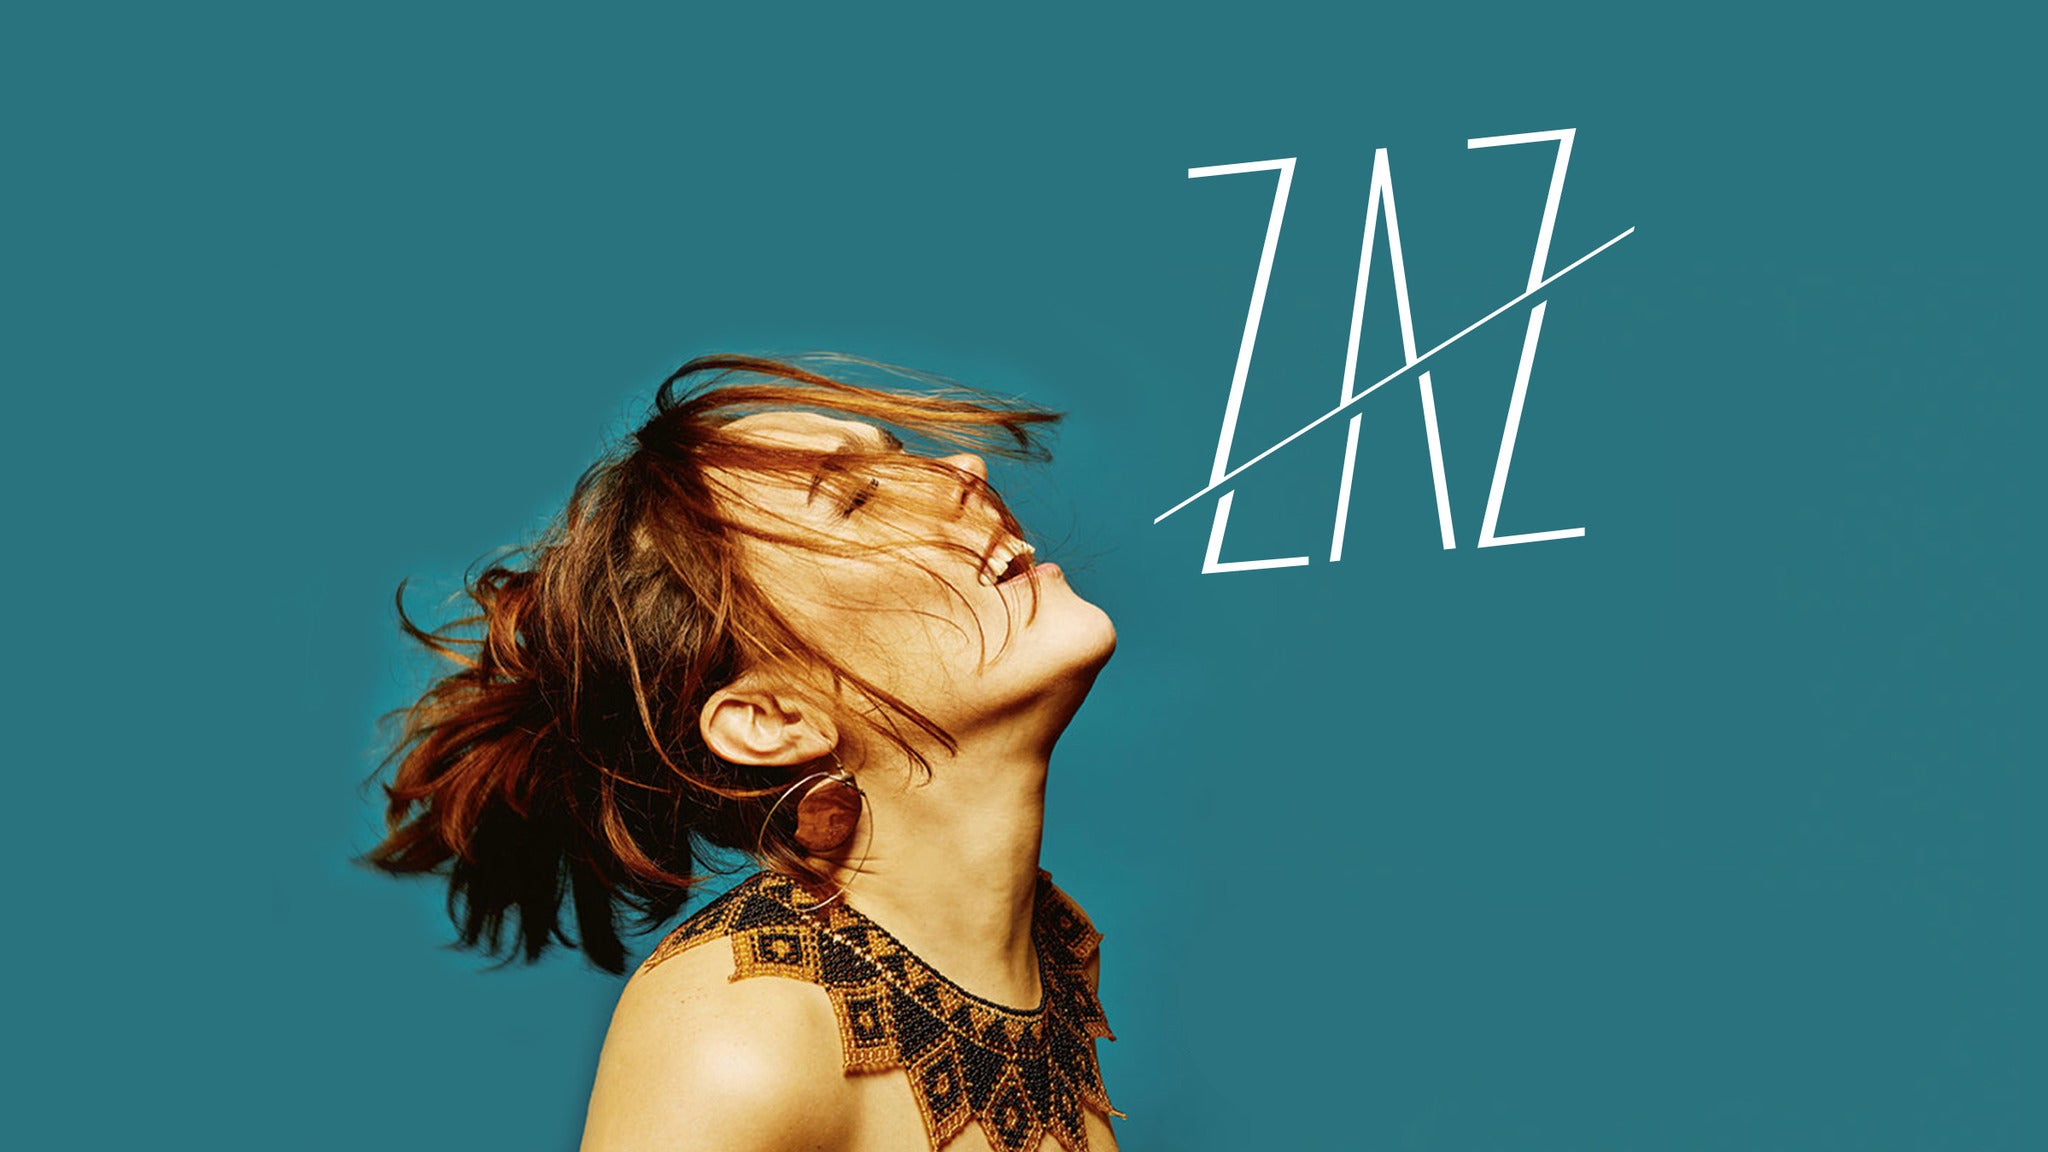 ZAZ: Η Γαλλίδα τραγουδίστρια ακυρώνει την περιοδεία της στον Καναδά επειδή δεν θέλει να εμβολιαστεί